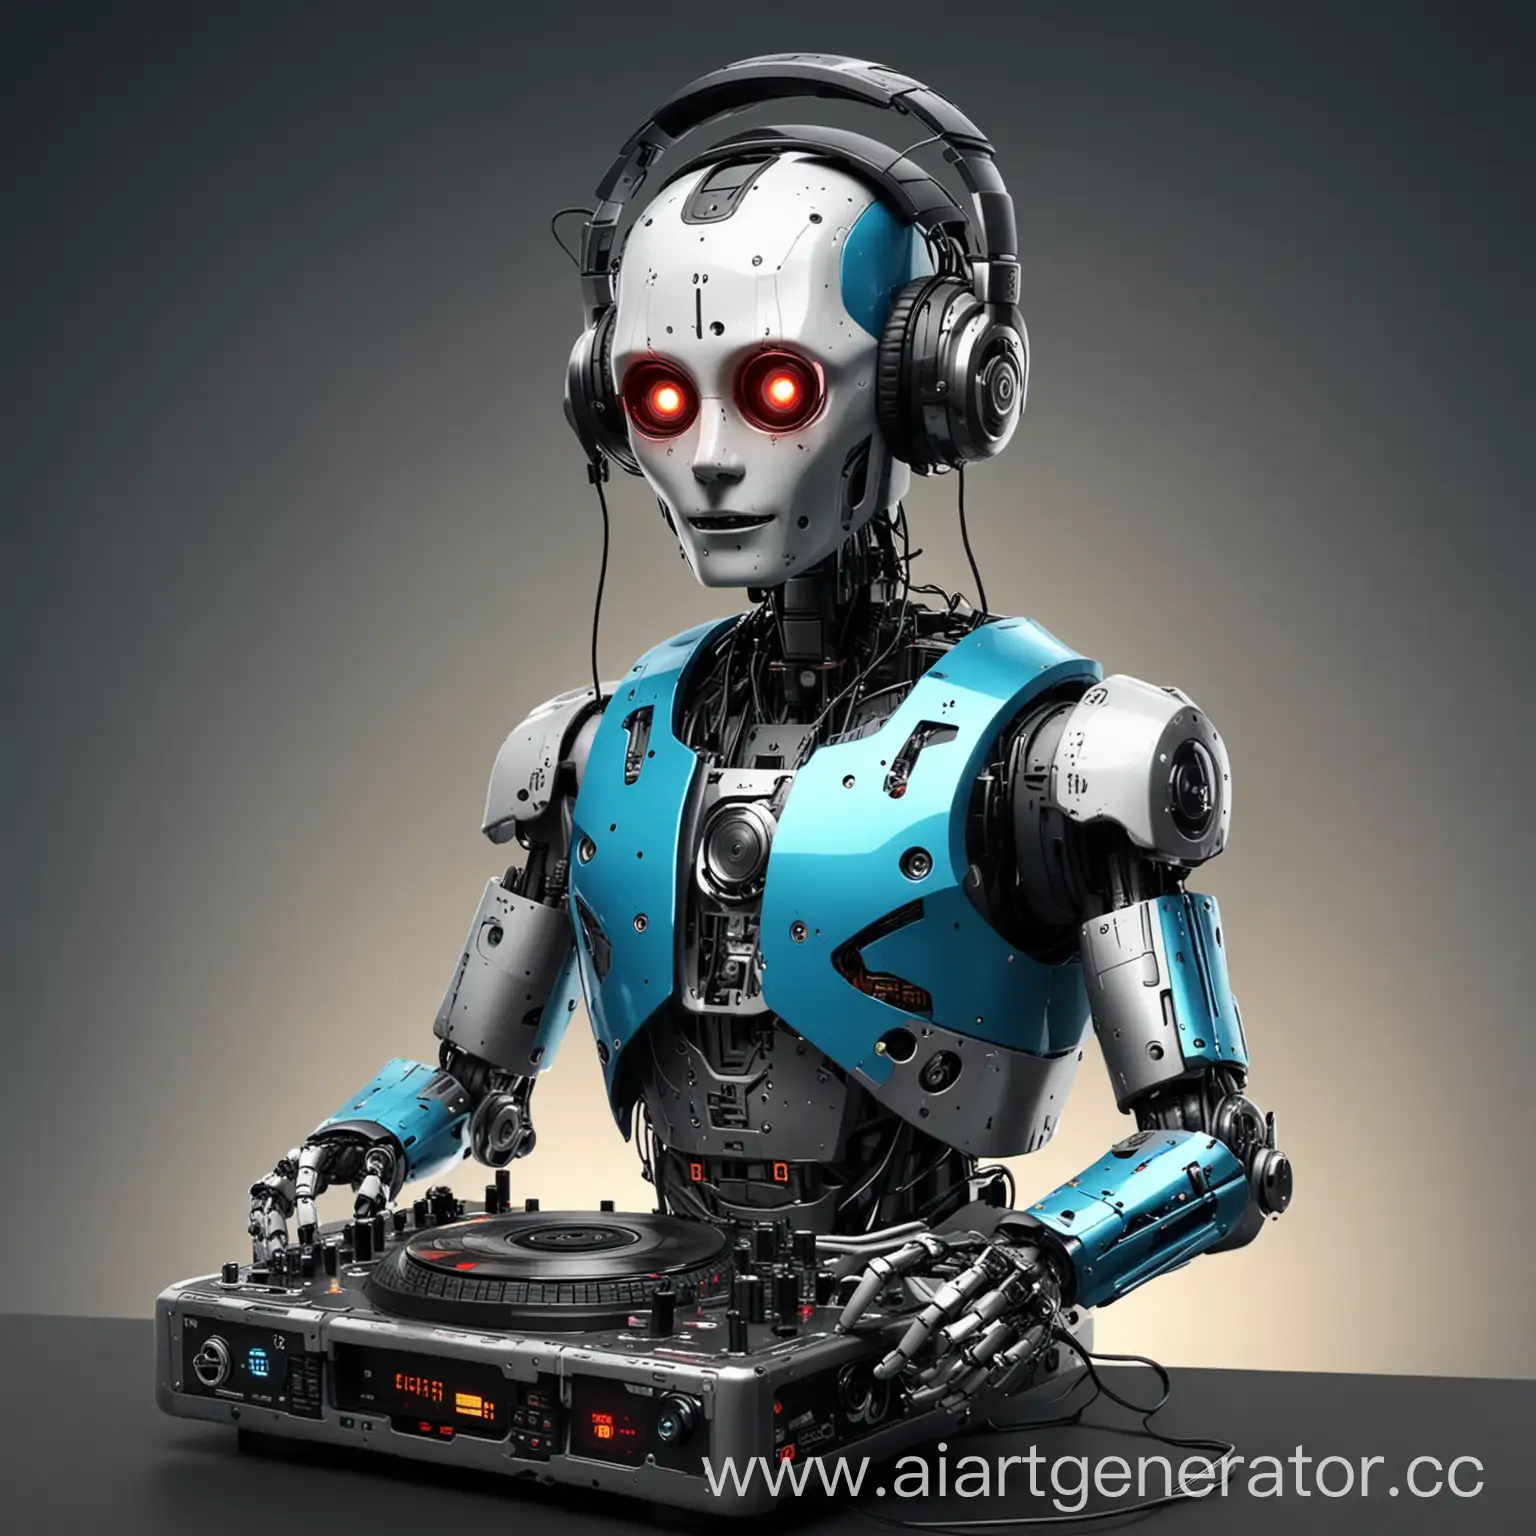 Futuristic-Musical-Robot-DJ-Entertaining-Crowd-with-Electro-Beats